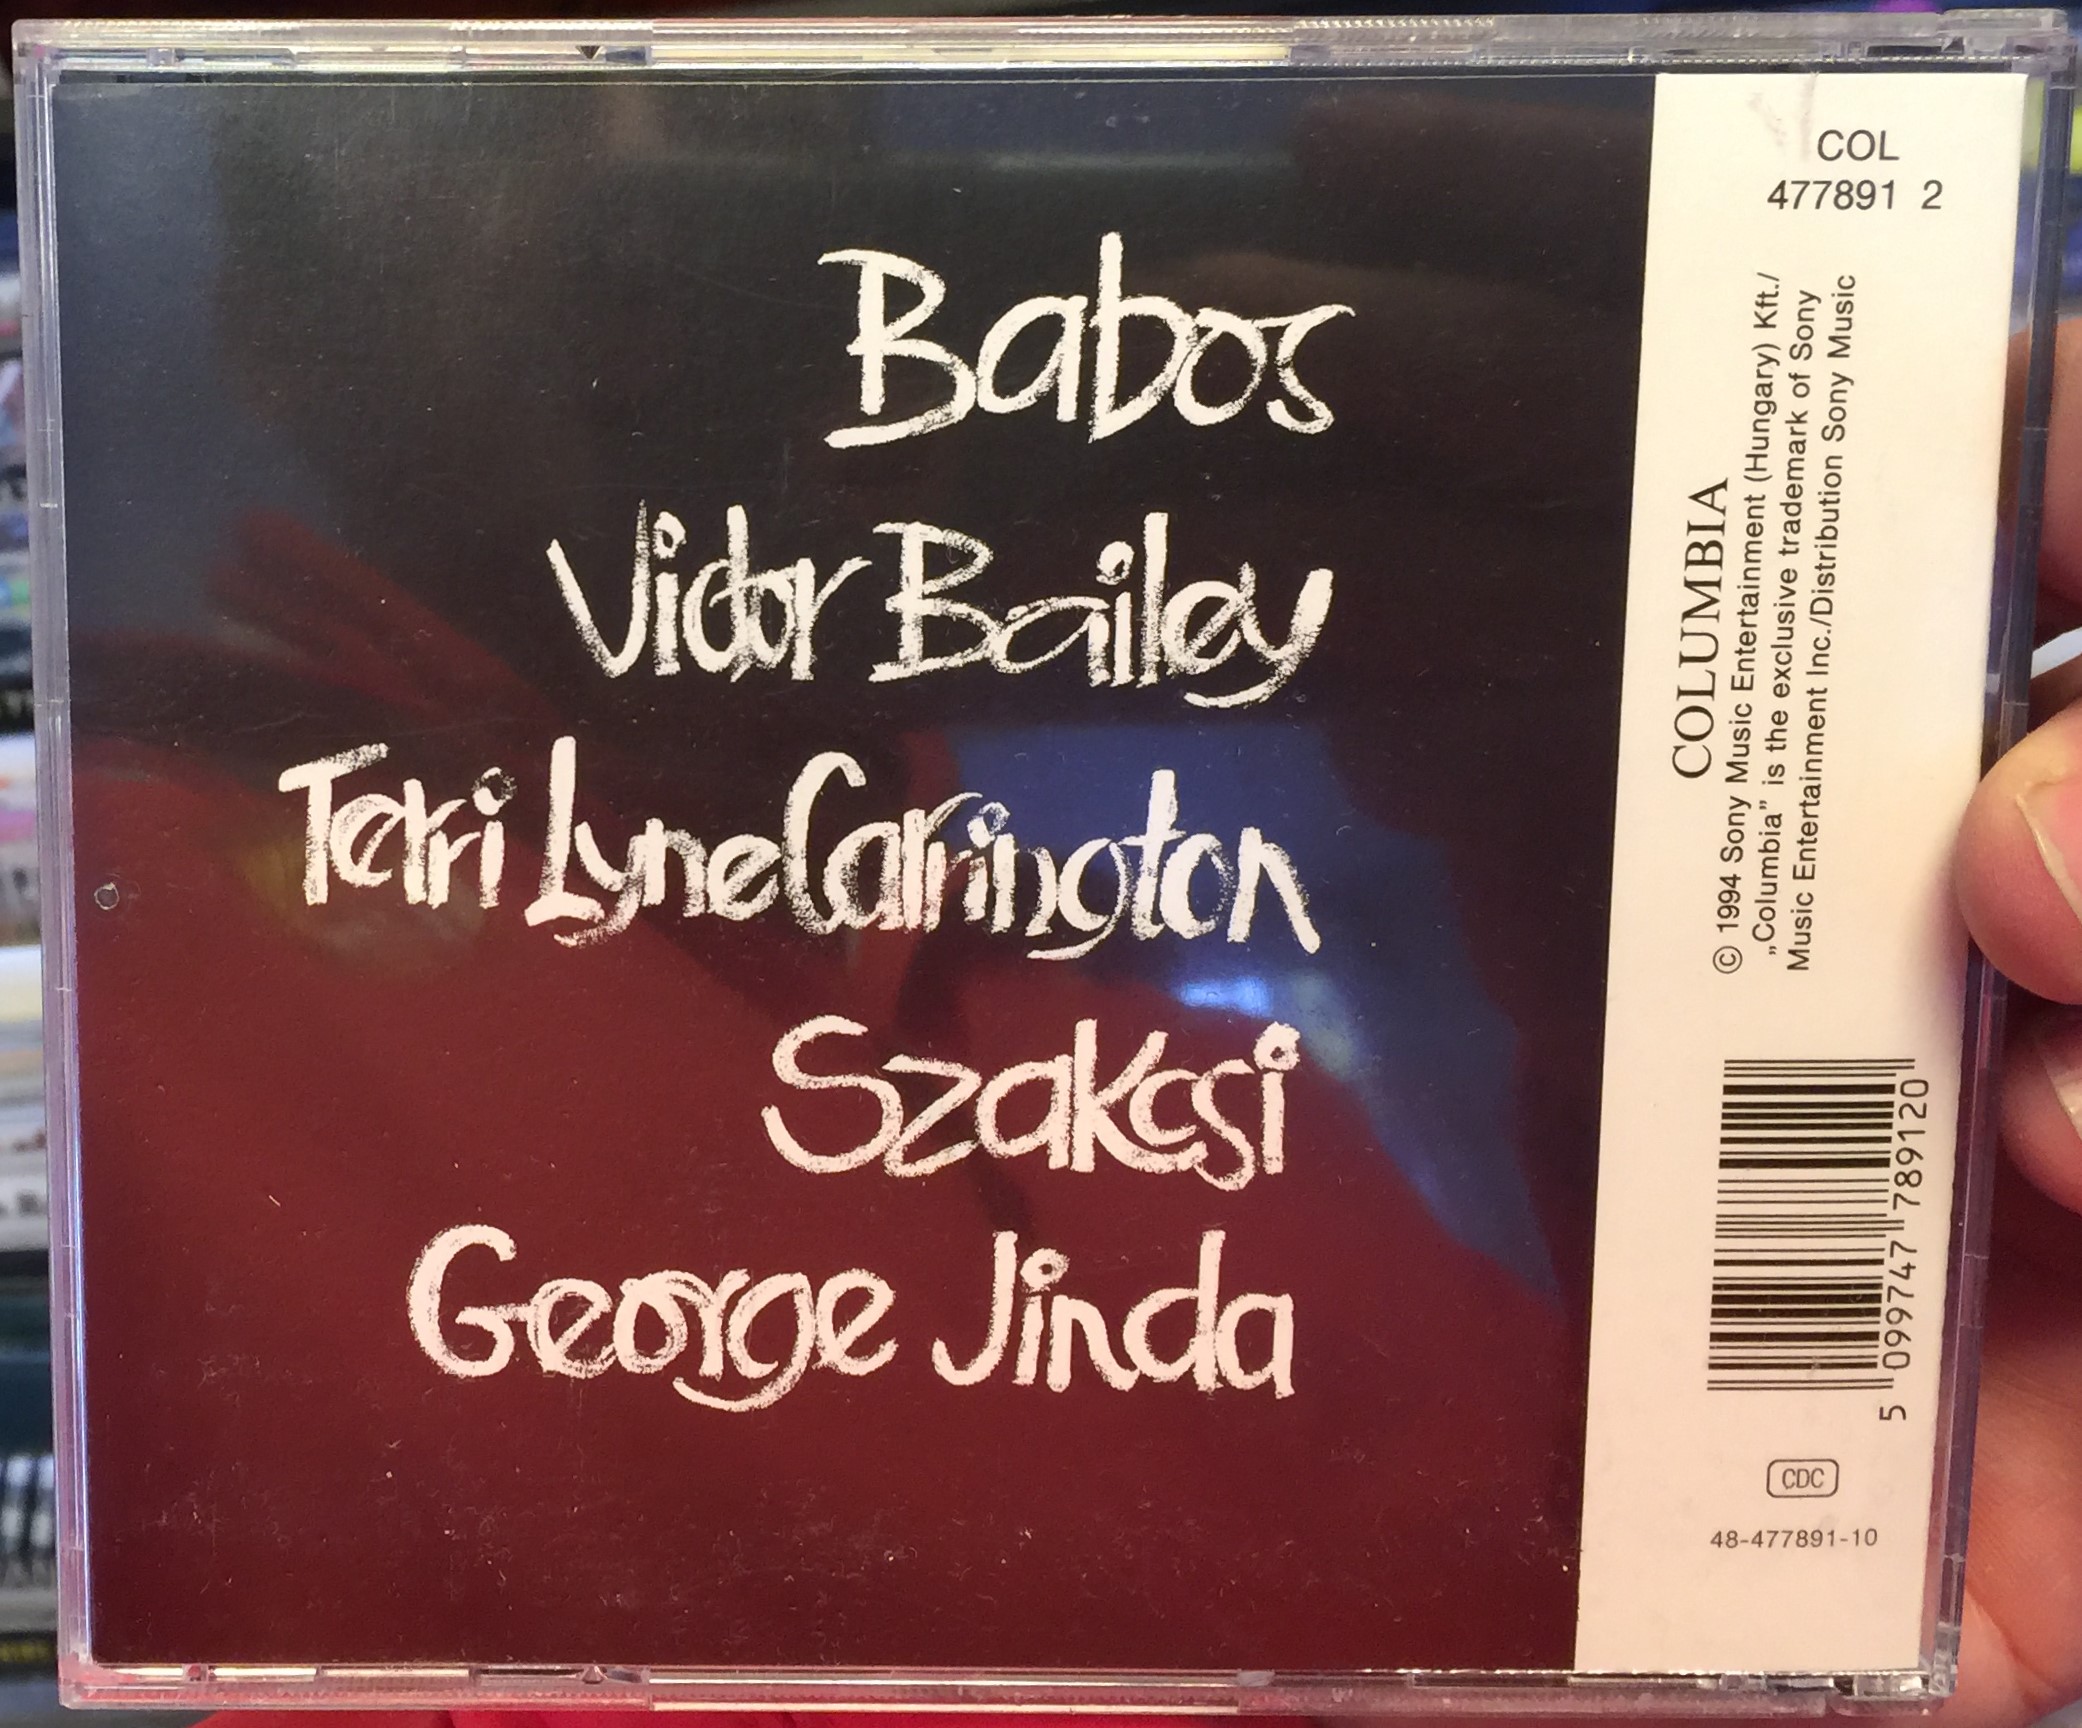 babos-blue-victory-columbia-audio-cd-1994-col-477891-2-2-.jpg